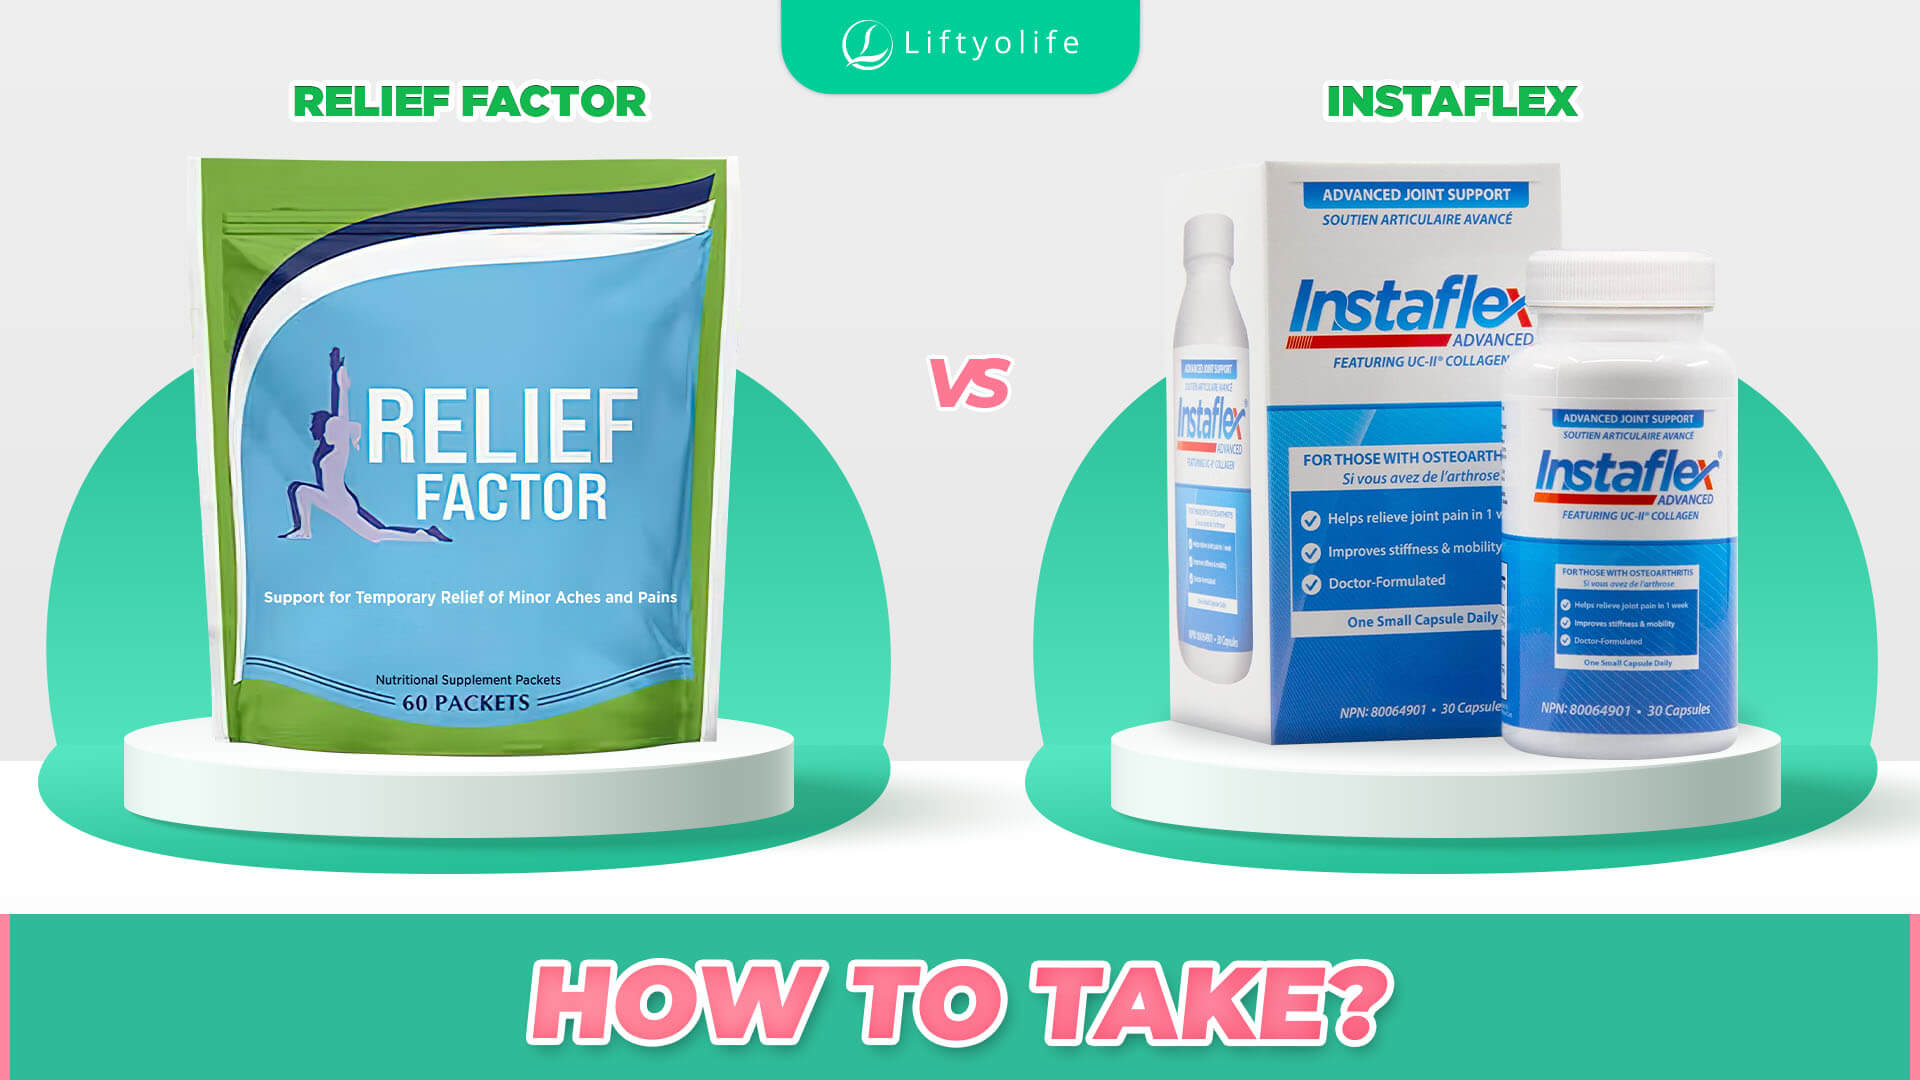 Instaflex Vs Relief Factor: How To Take?